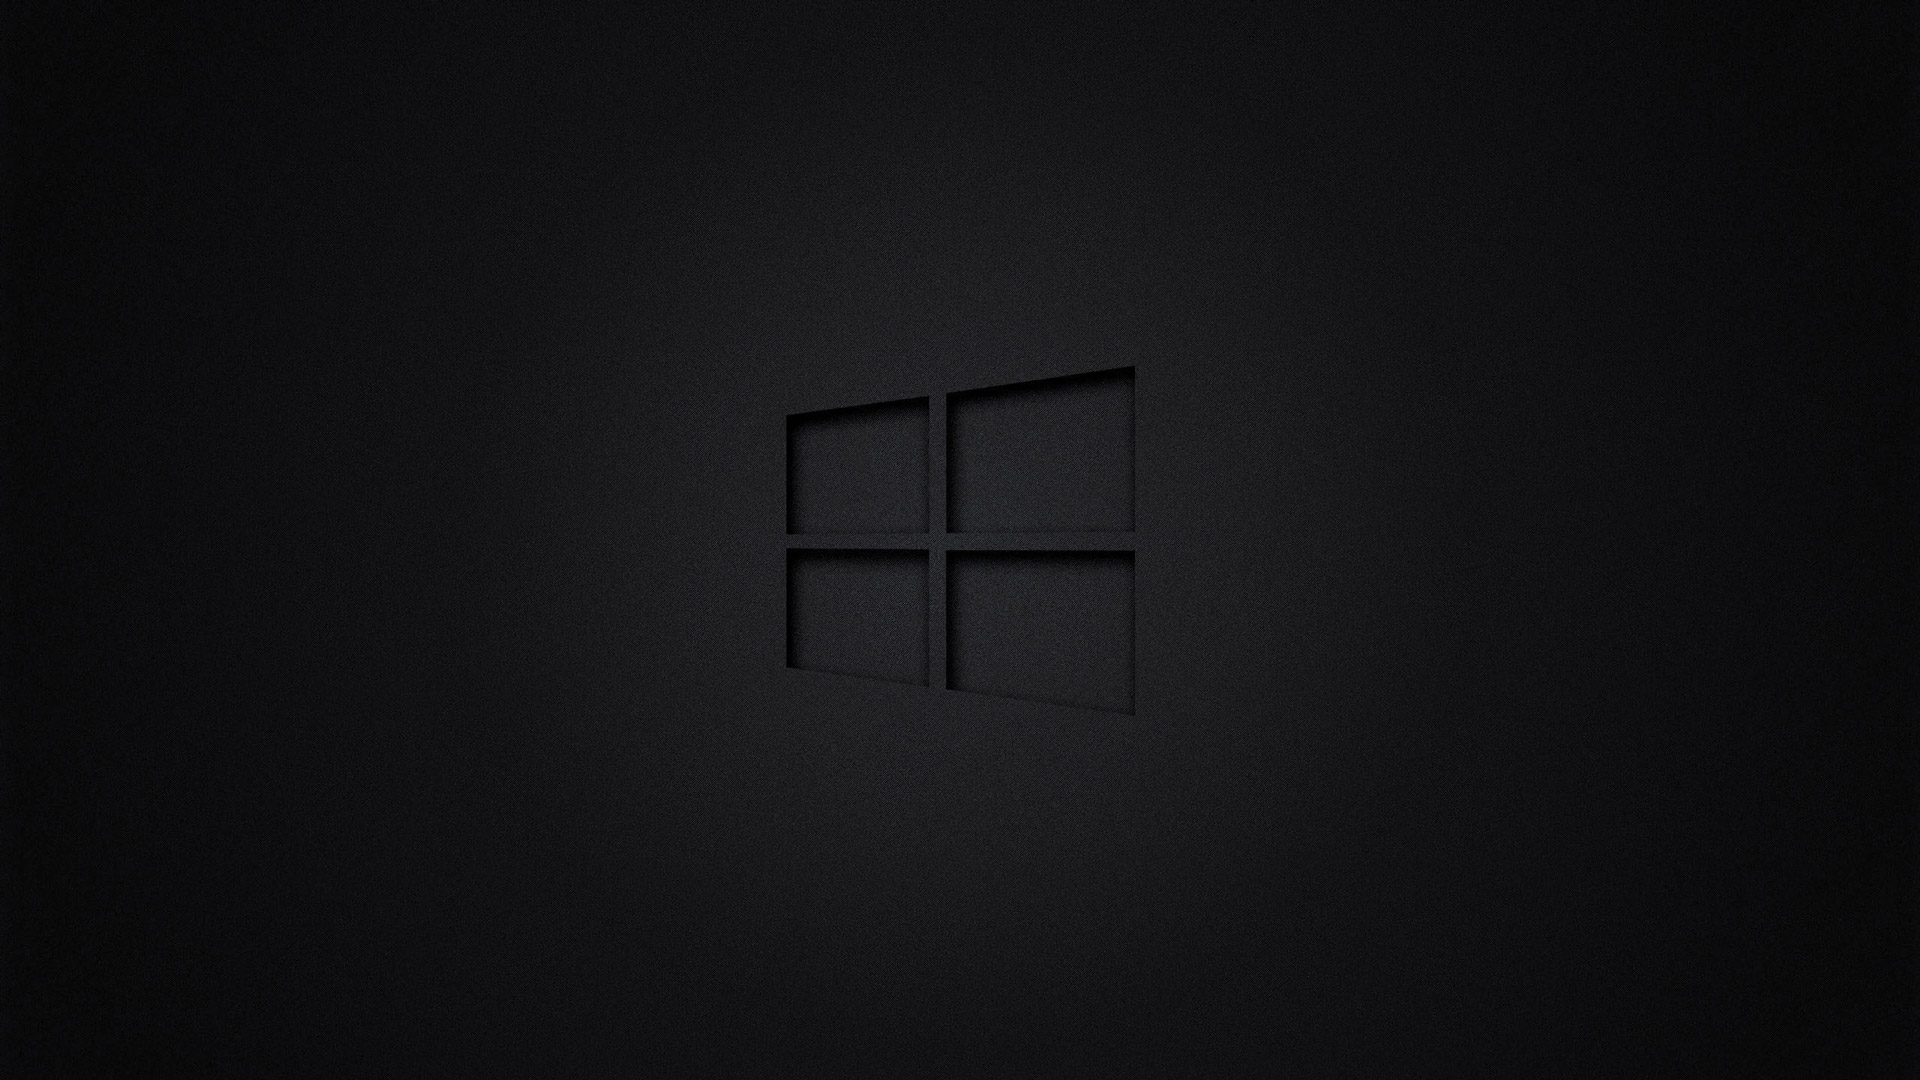 Windows 10 Dark, HD Computer, 4k Wallpapers, Images, Backgrounds